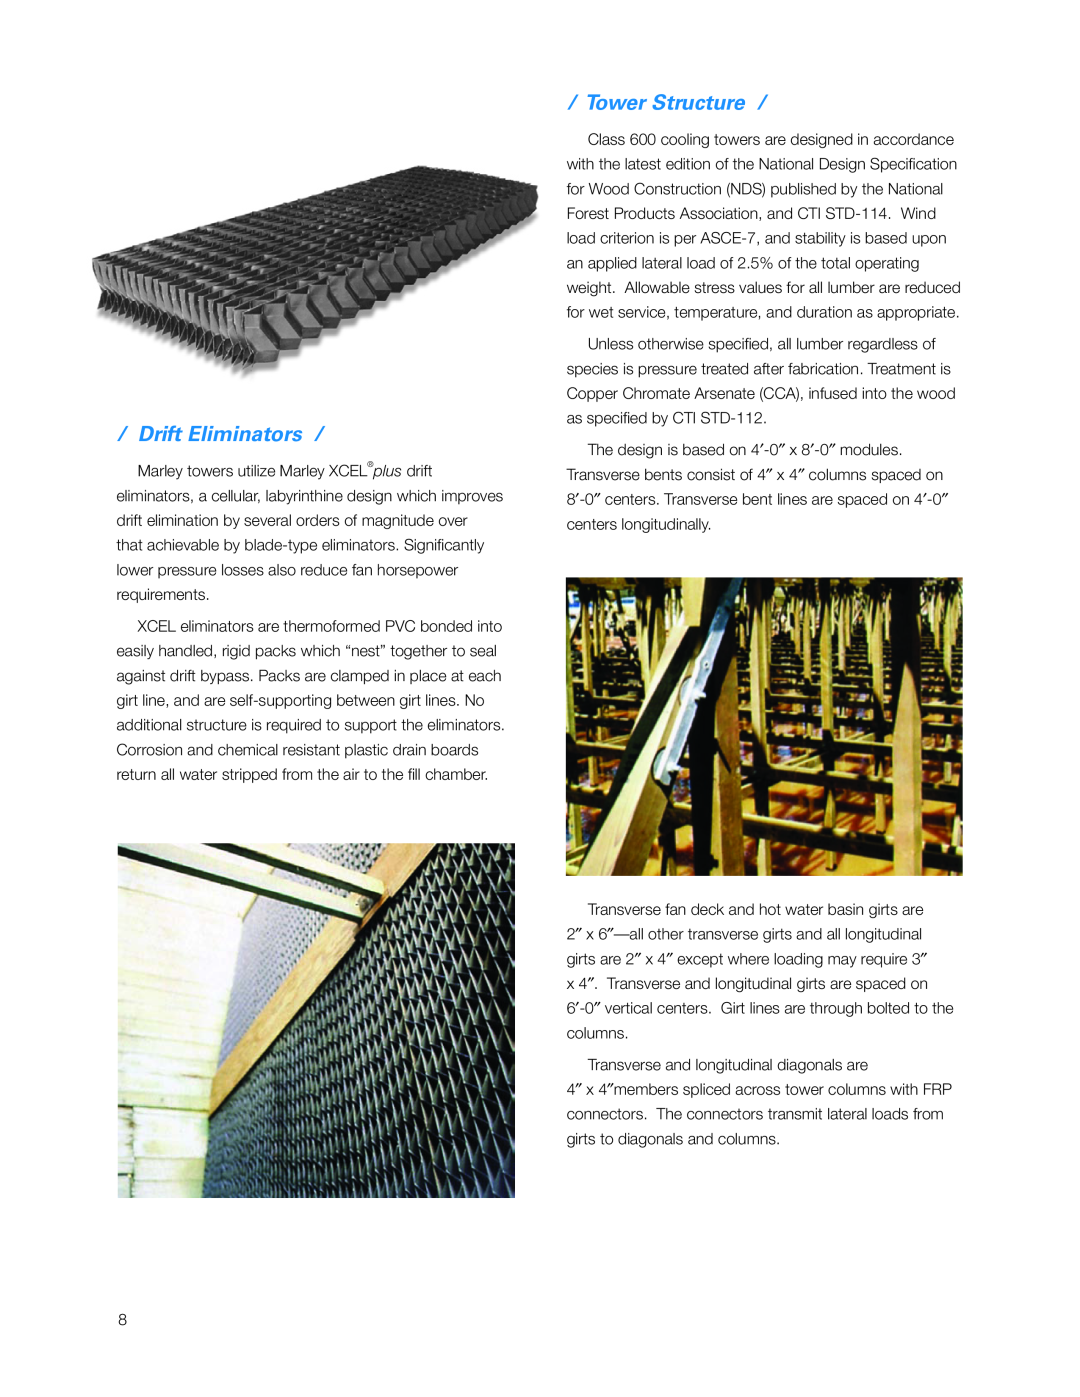 SPX Cooling Technologies 600 manual Drift Eliminators, Tower Structure 